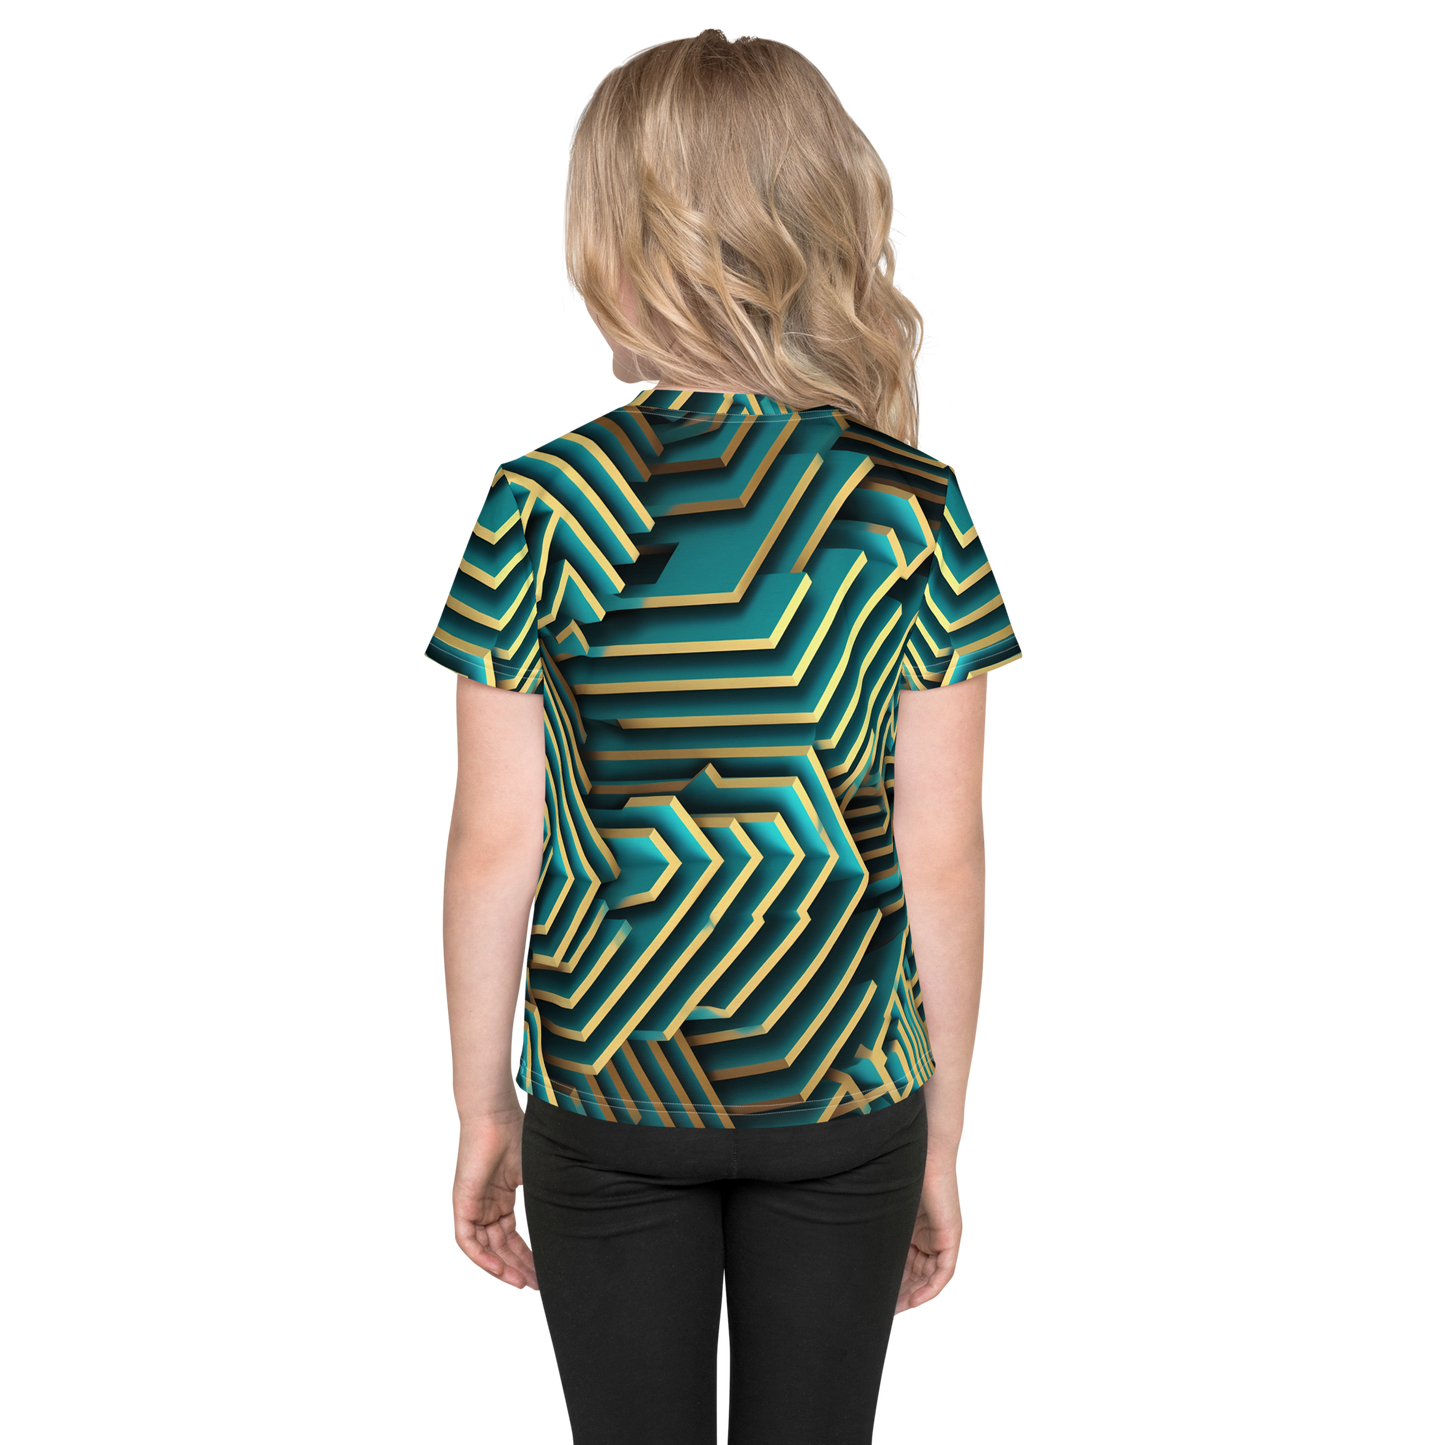 3D Maze Illusion | 3D Patterns | All-Over Print Kids Crew Neck T-Shirt - #5